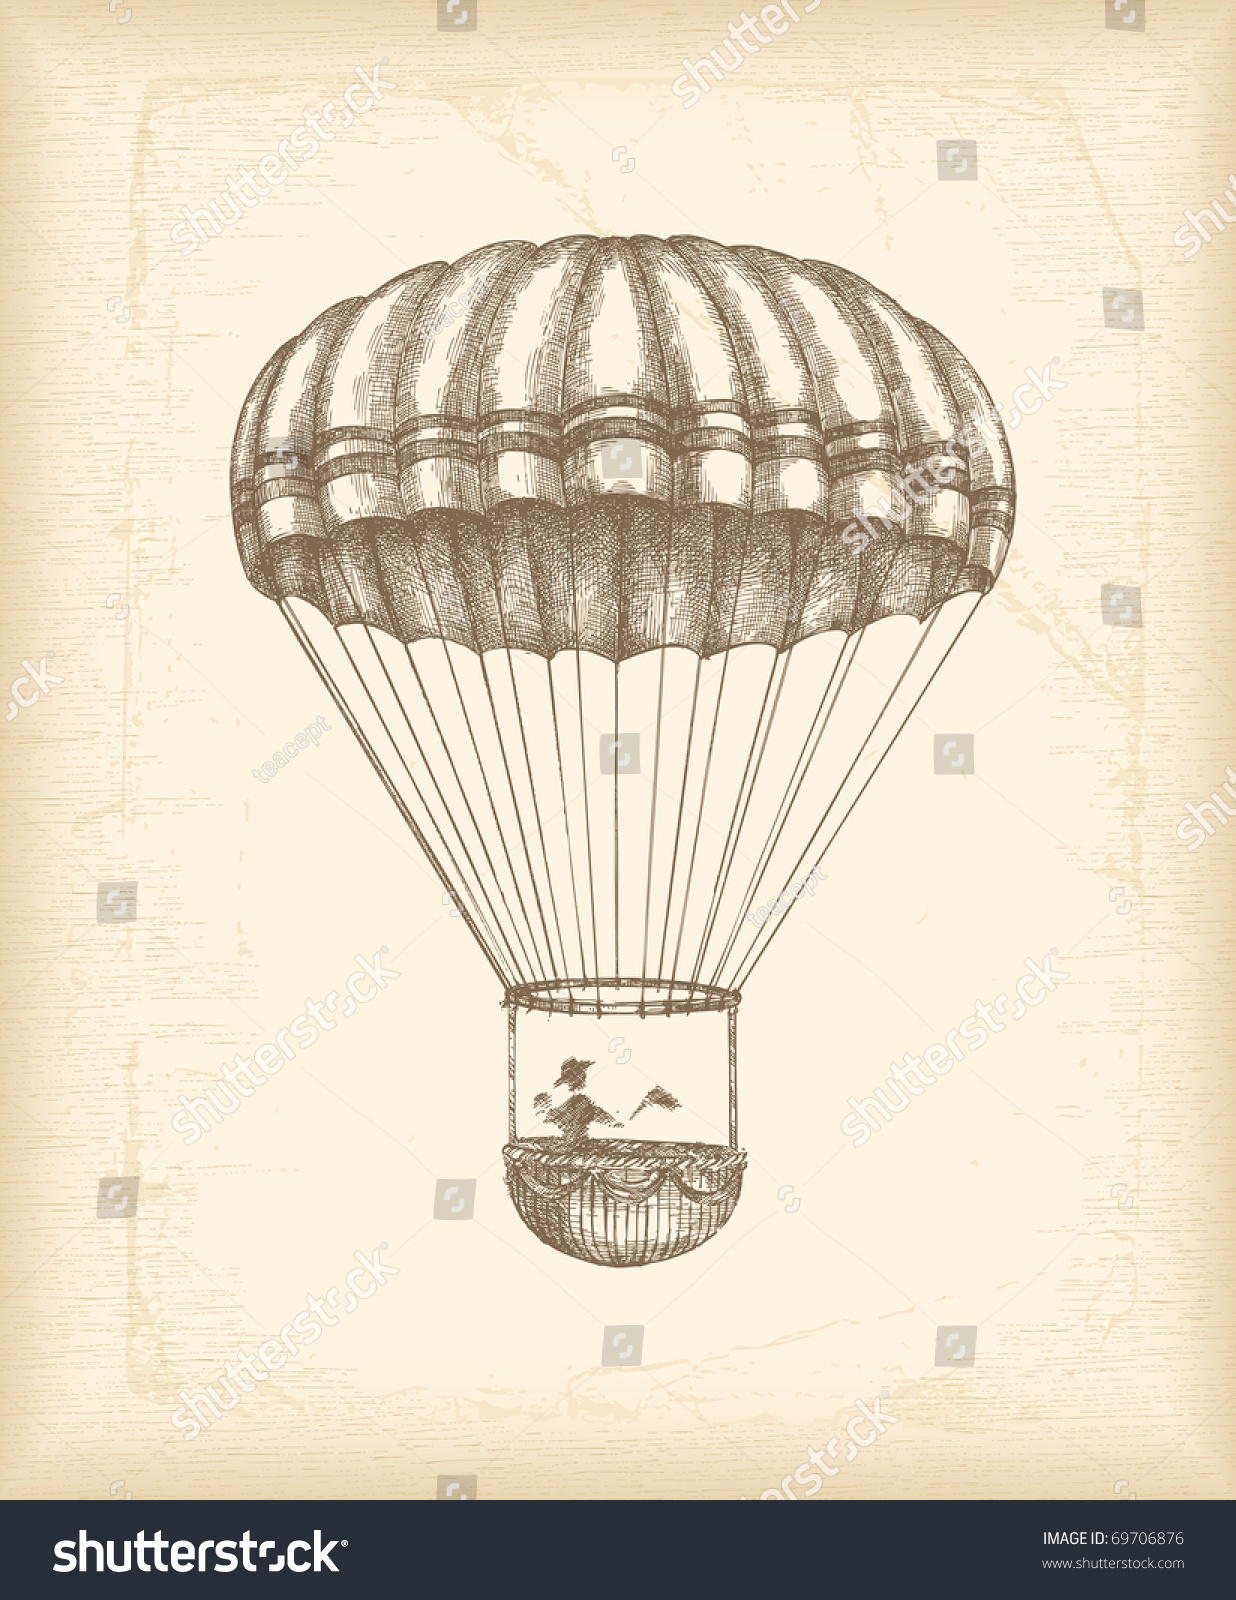 Vintage Parachute Sketch Stock Vector 69706876 - Shutterstock